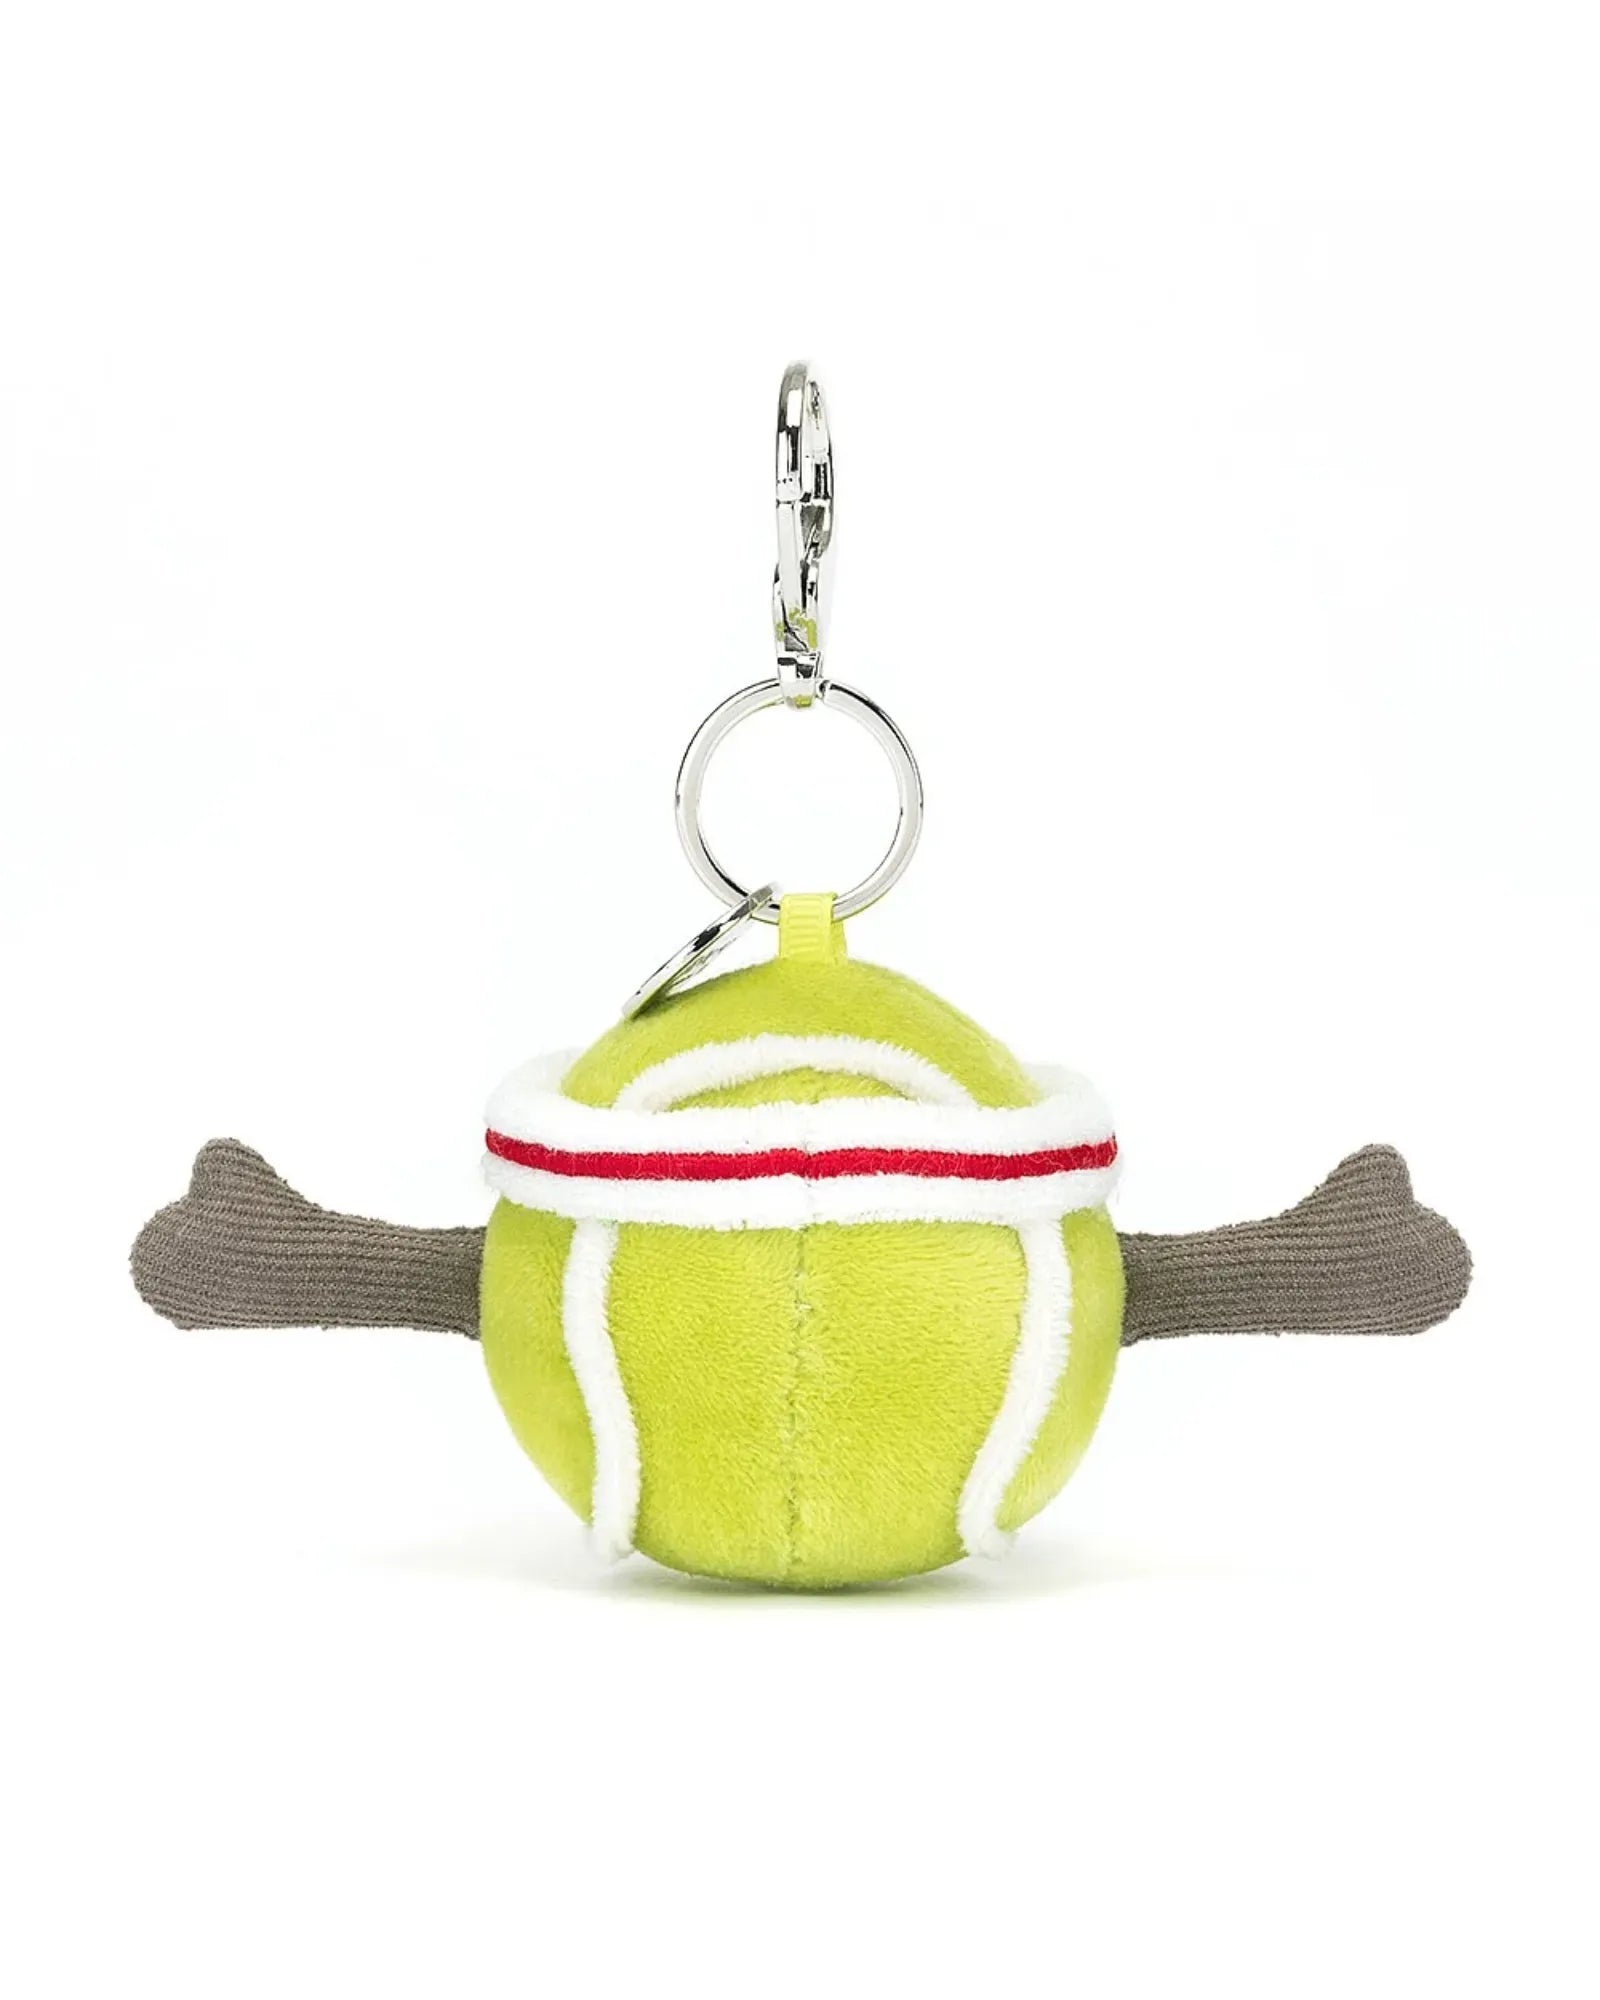 Amuseable Sports Tennis Bag Charm